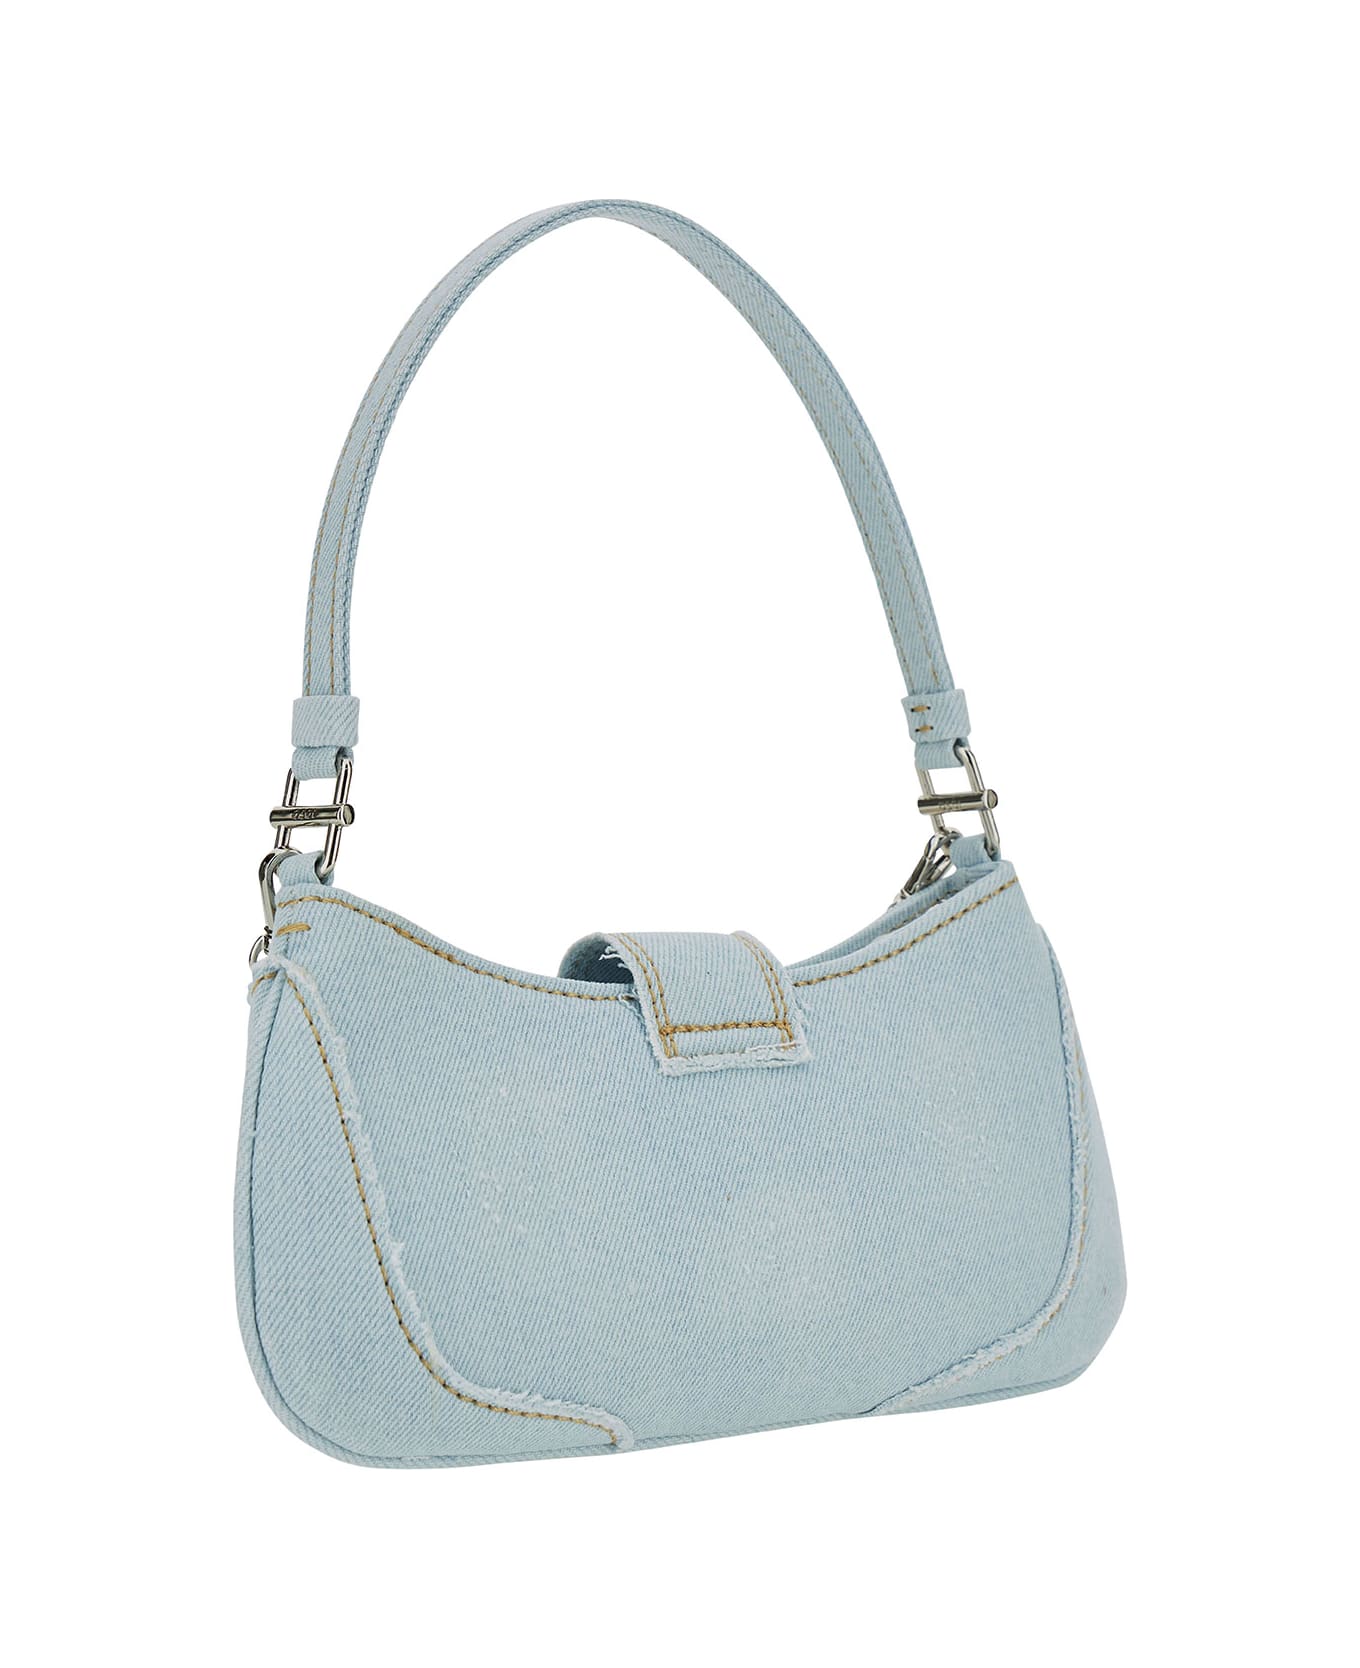 OSOI 'small Brocle' Light Blue Shoulder Bag In Cotton Denim Woman - Light blue